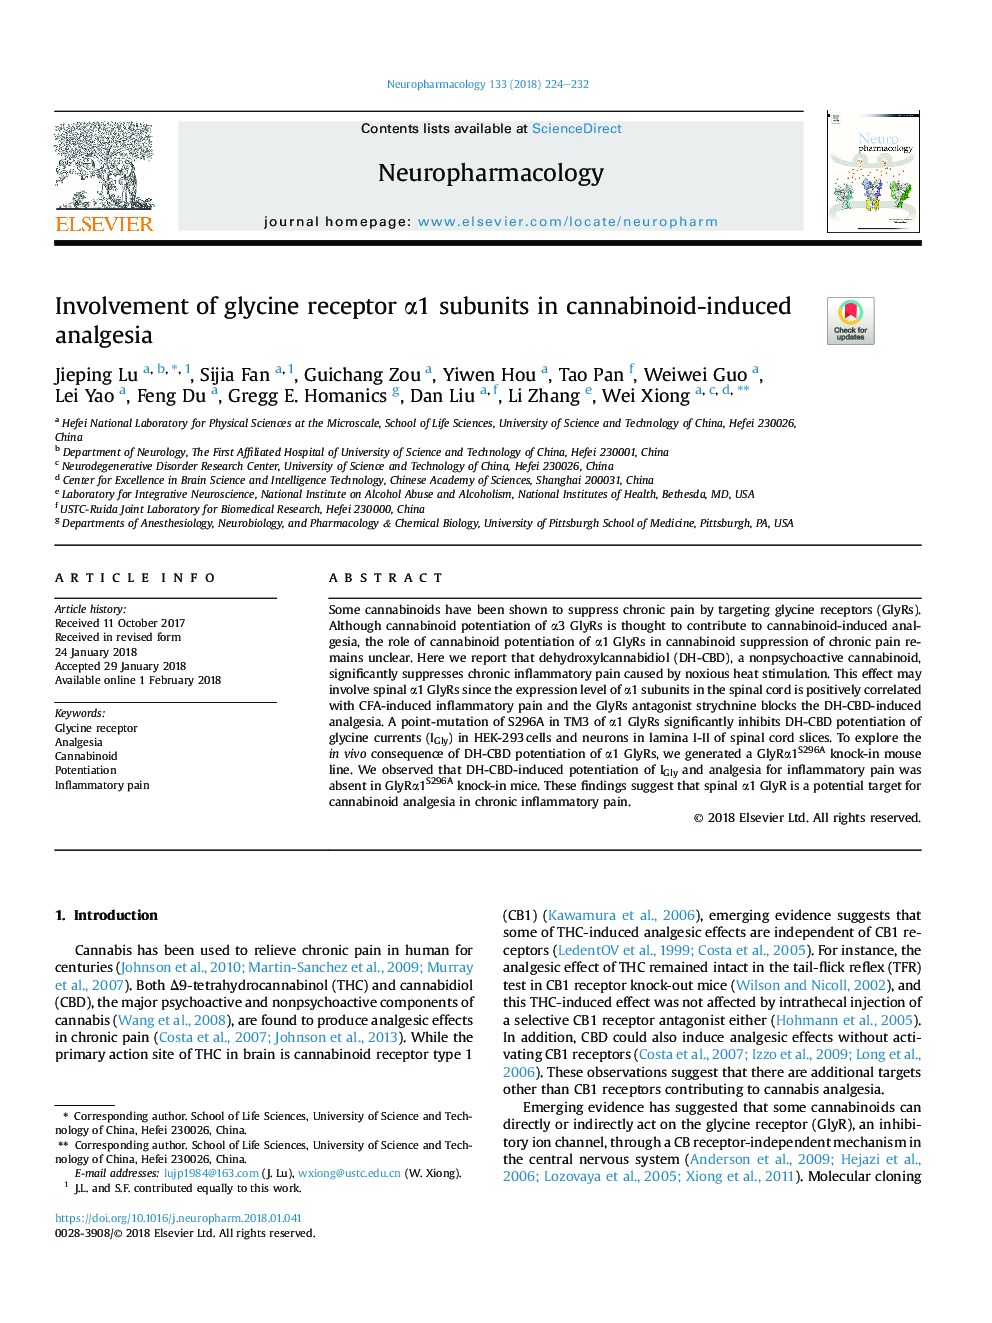 Involvement of glycine receptor Î±1 subunits in cannabinoid-induced analgesia